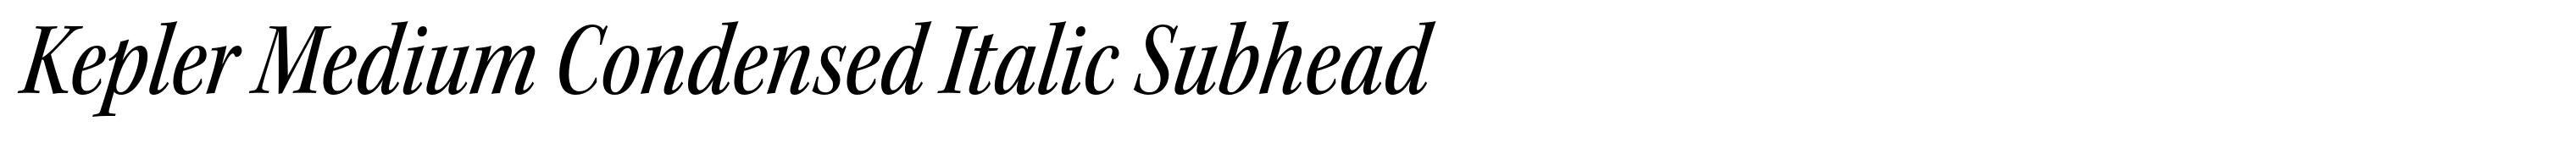 Kepler Medium Condensed Italic Subhead